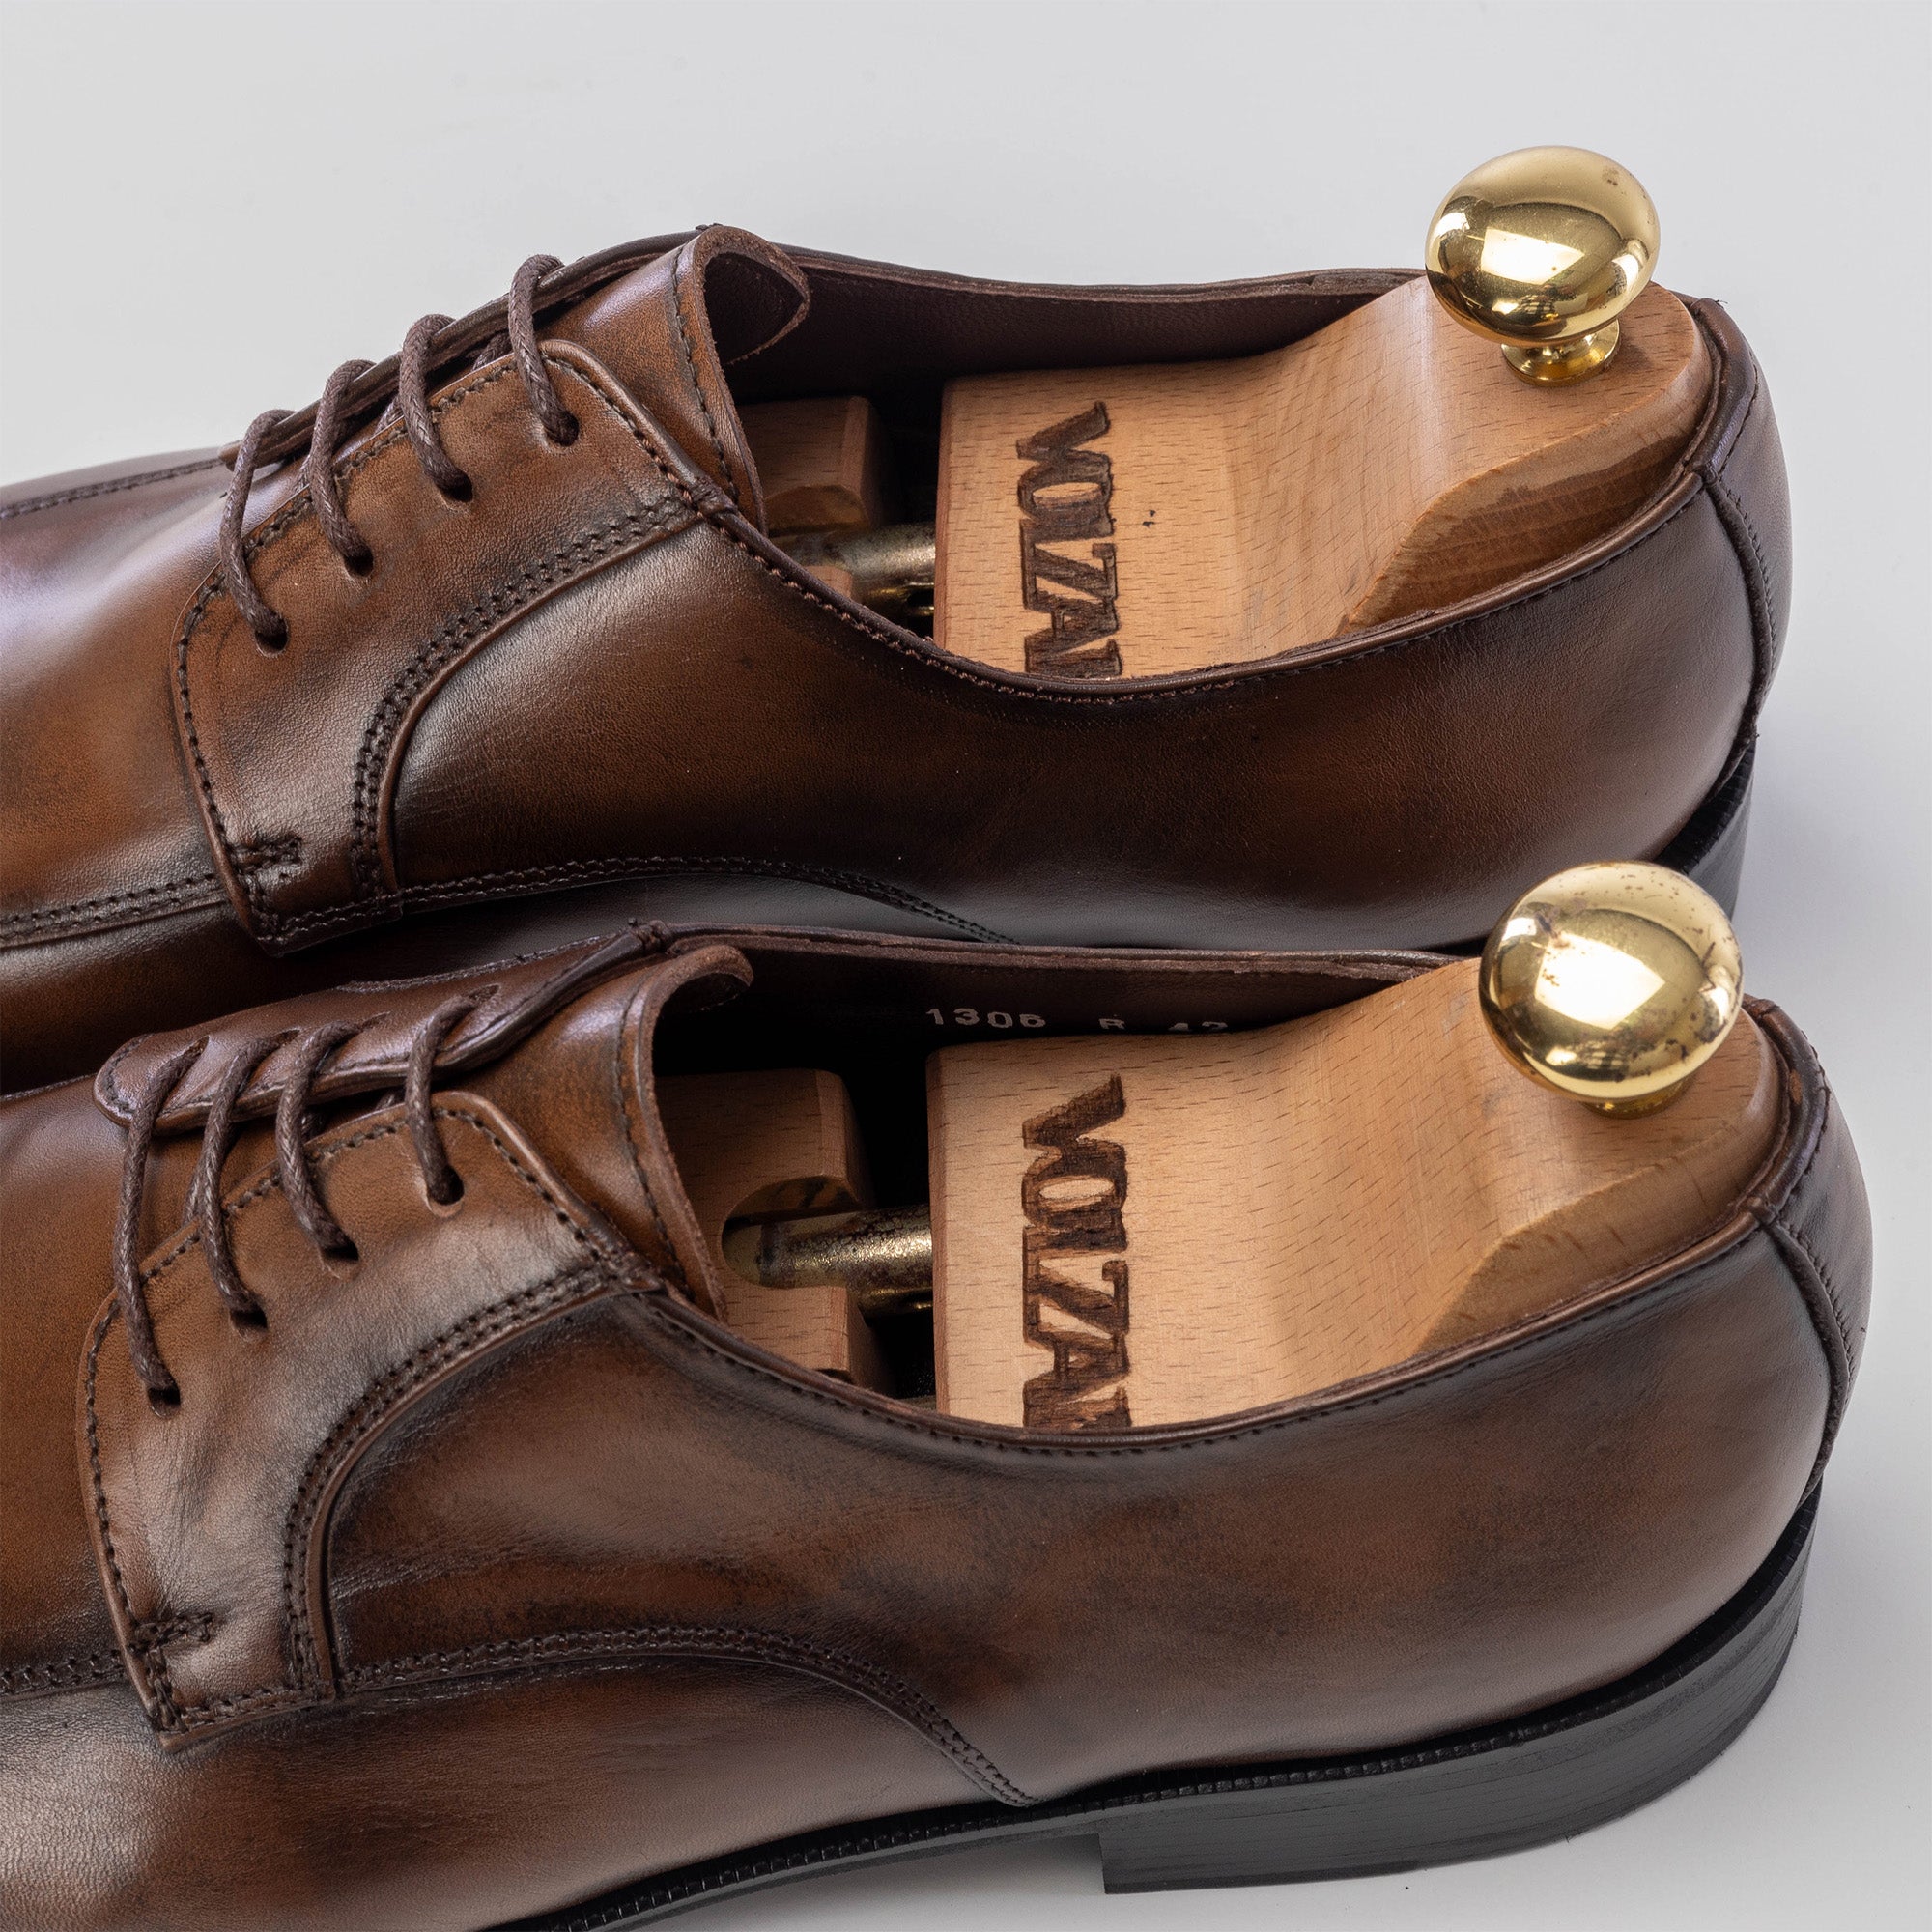 ''1306 Chaussure en cuir Marron vintage